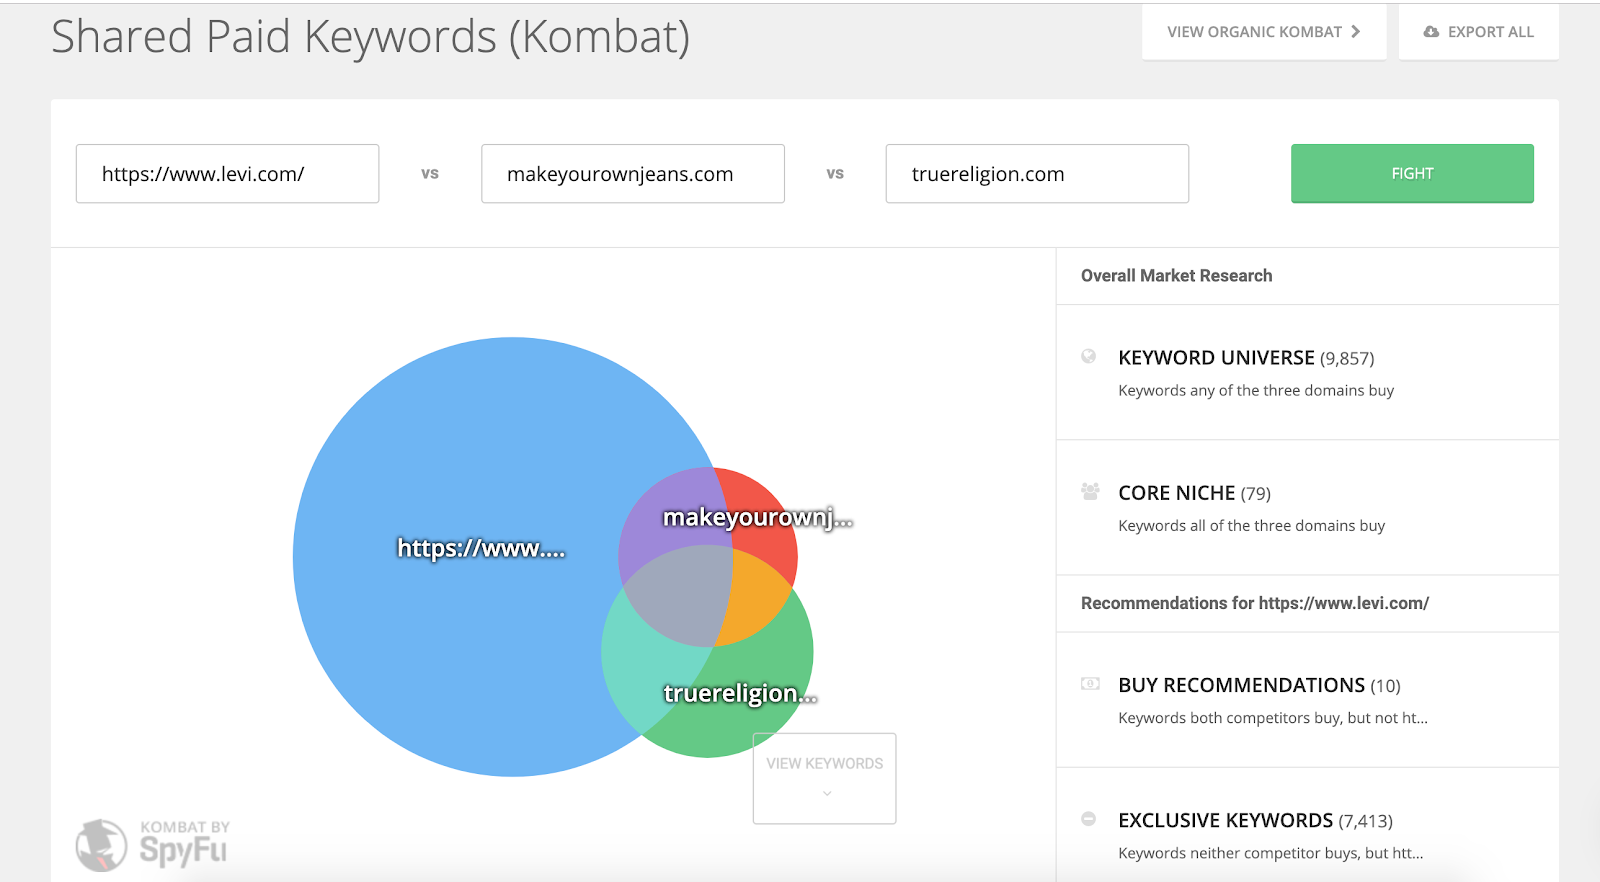 SpyFu Dashboard: Shared Paid Keywords - Kombat